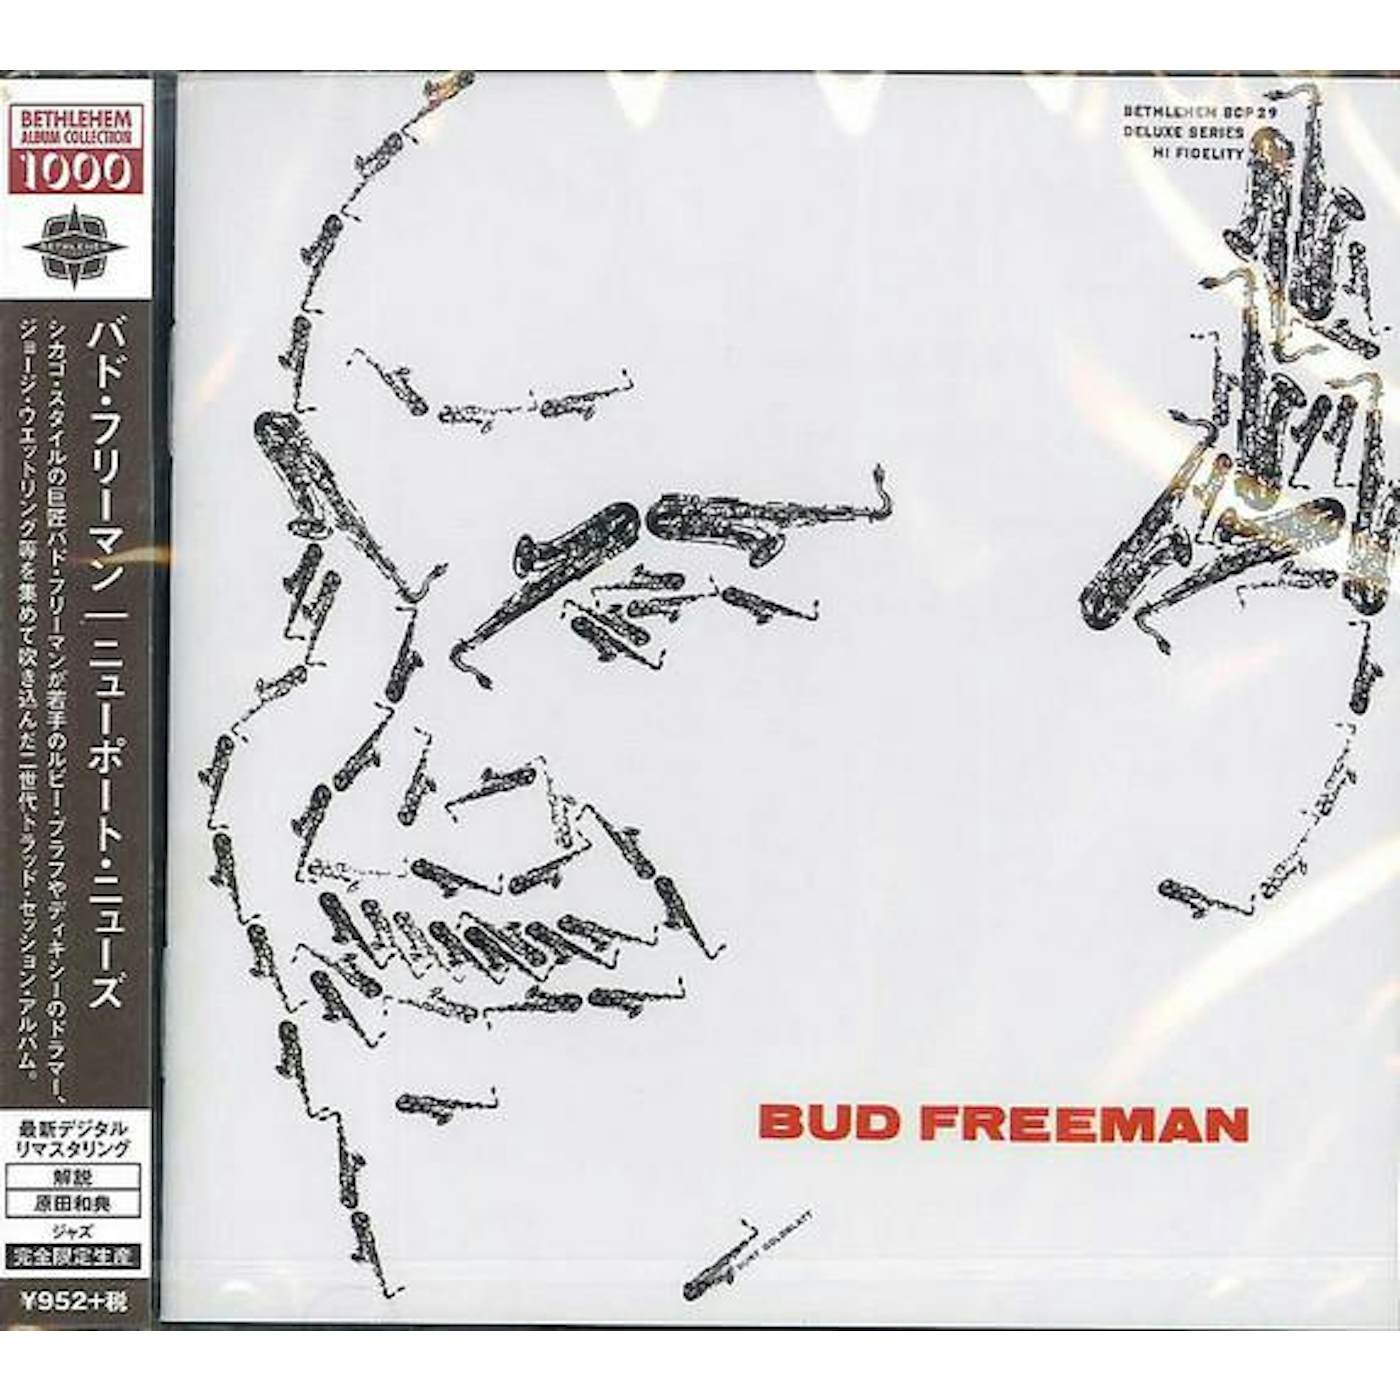 Bud Freeman NEWPORT NEWS CD